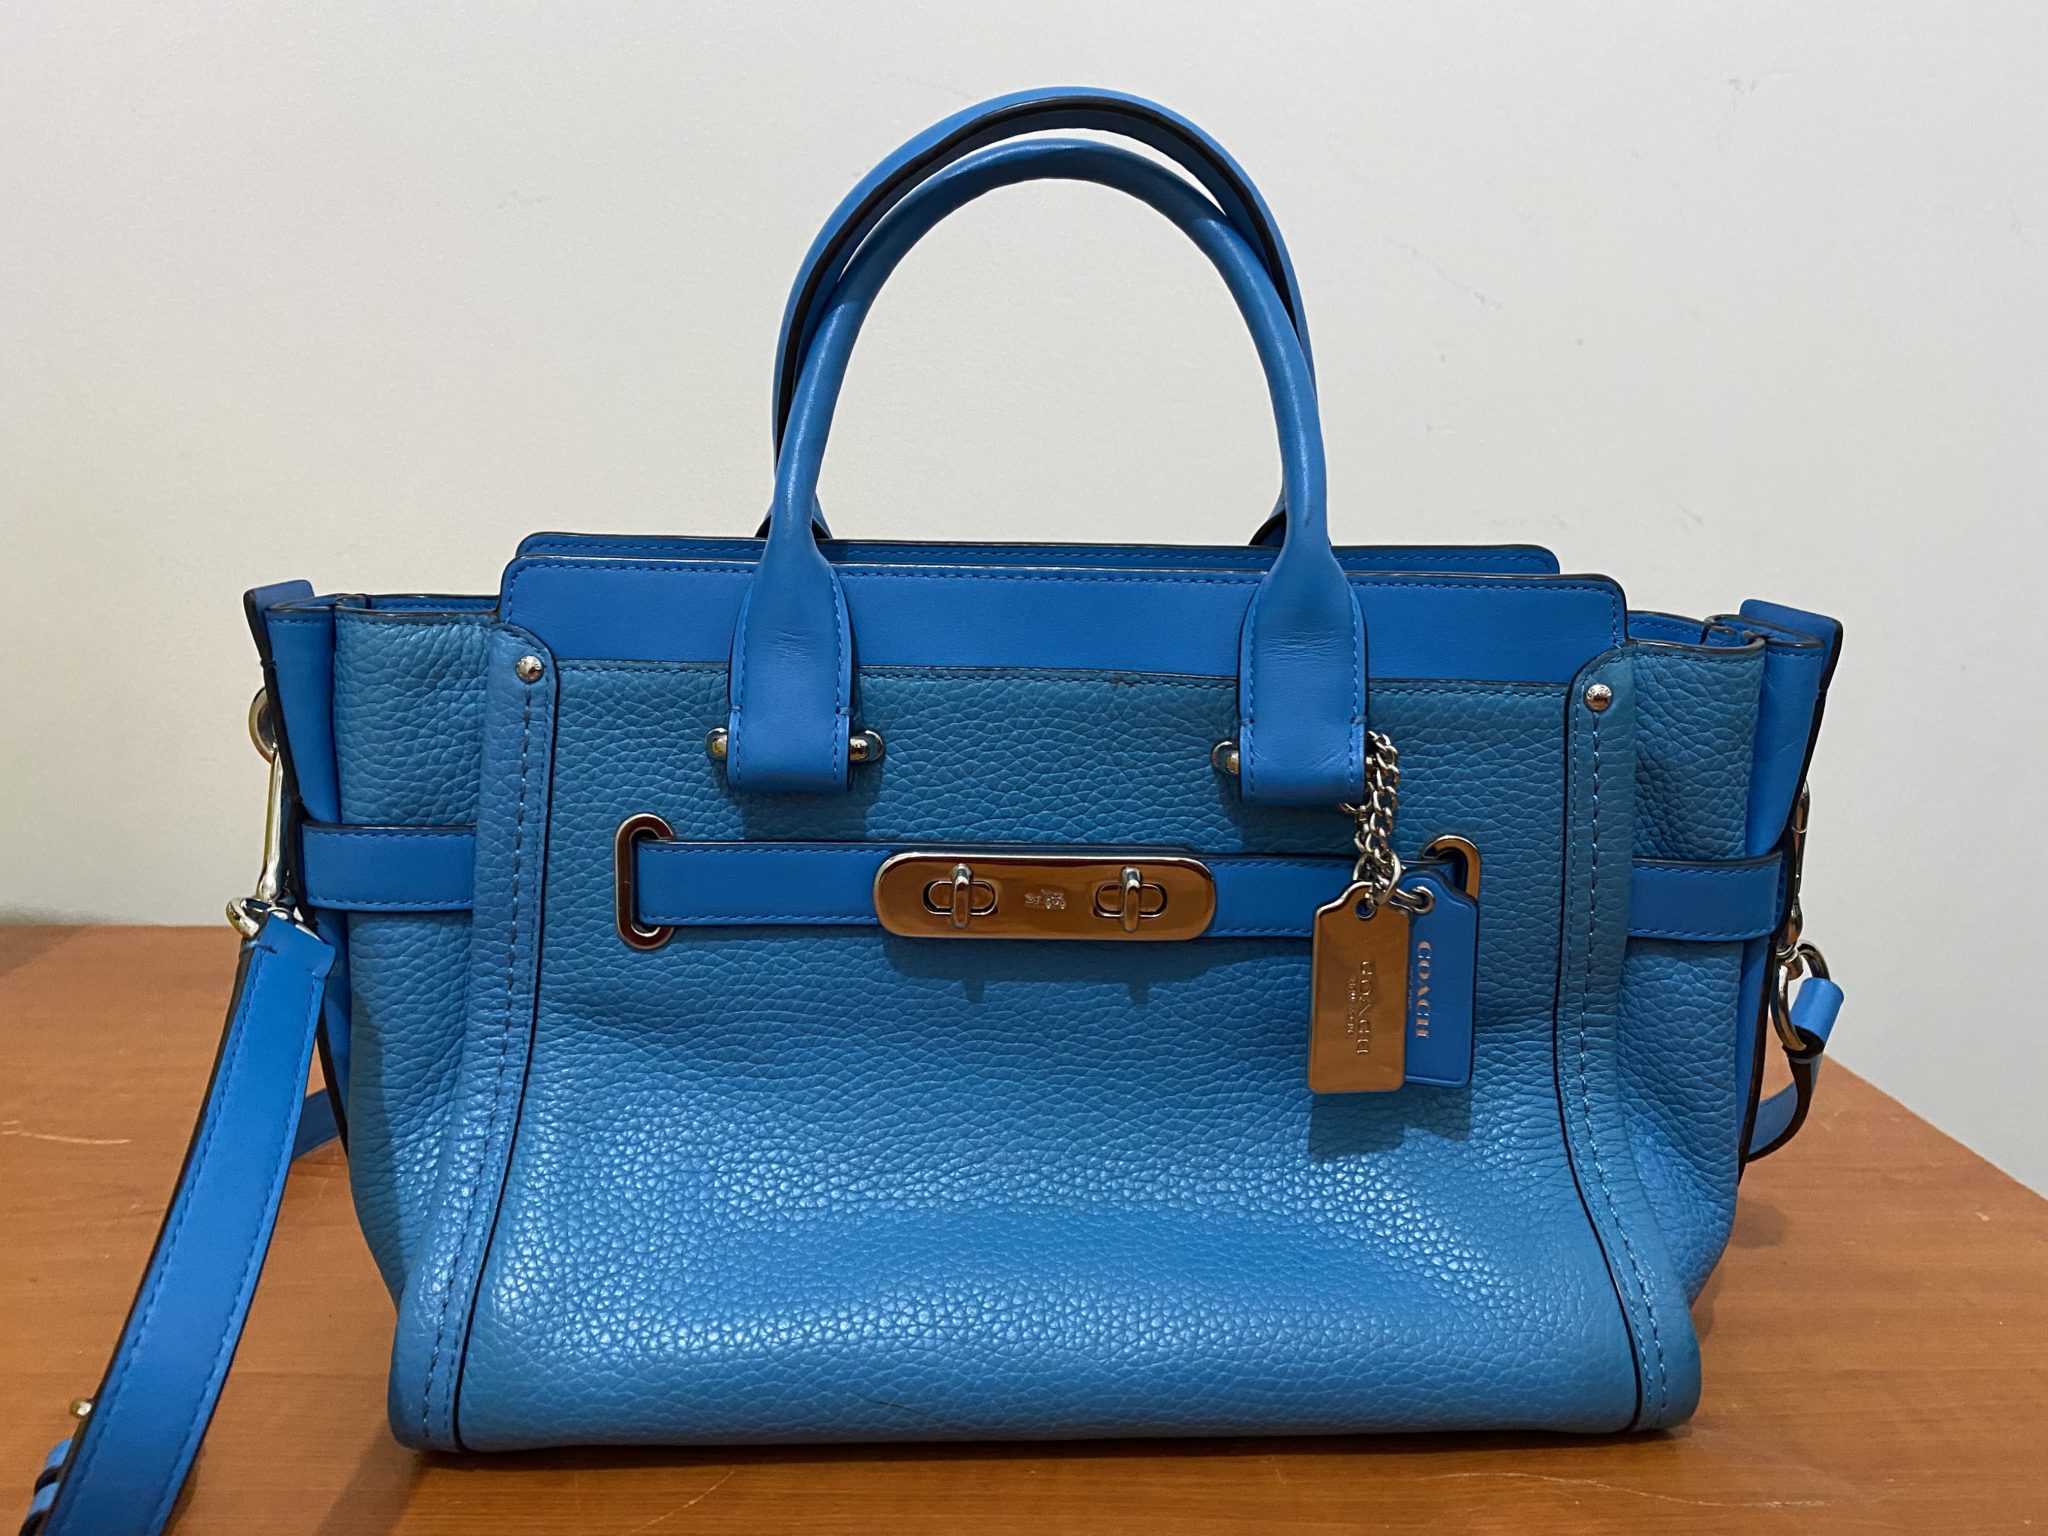 Coach Swagger handbag - The Luxury Flavor